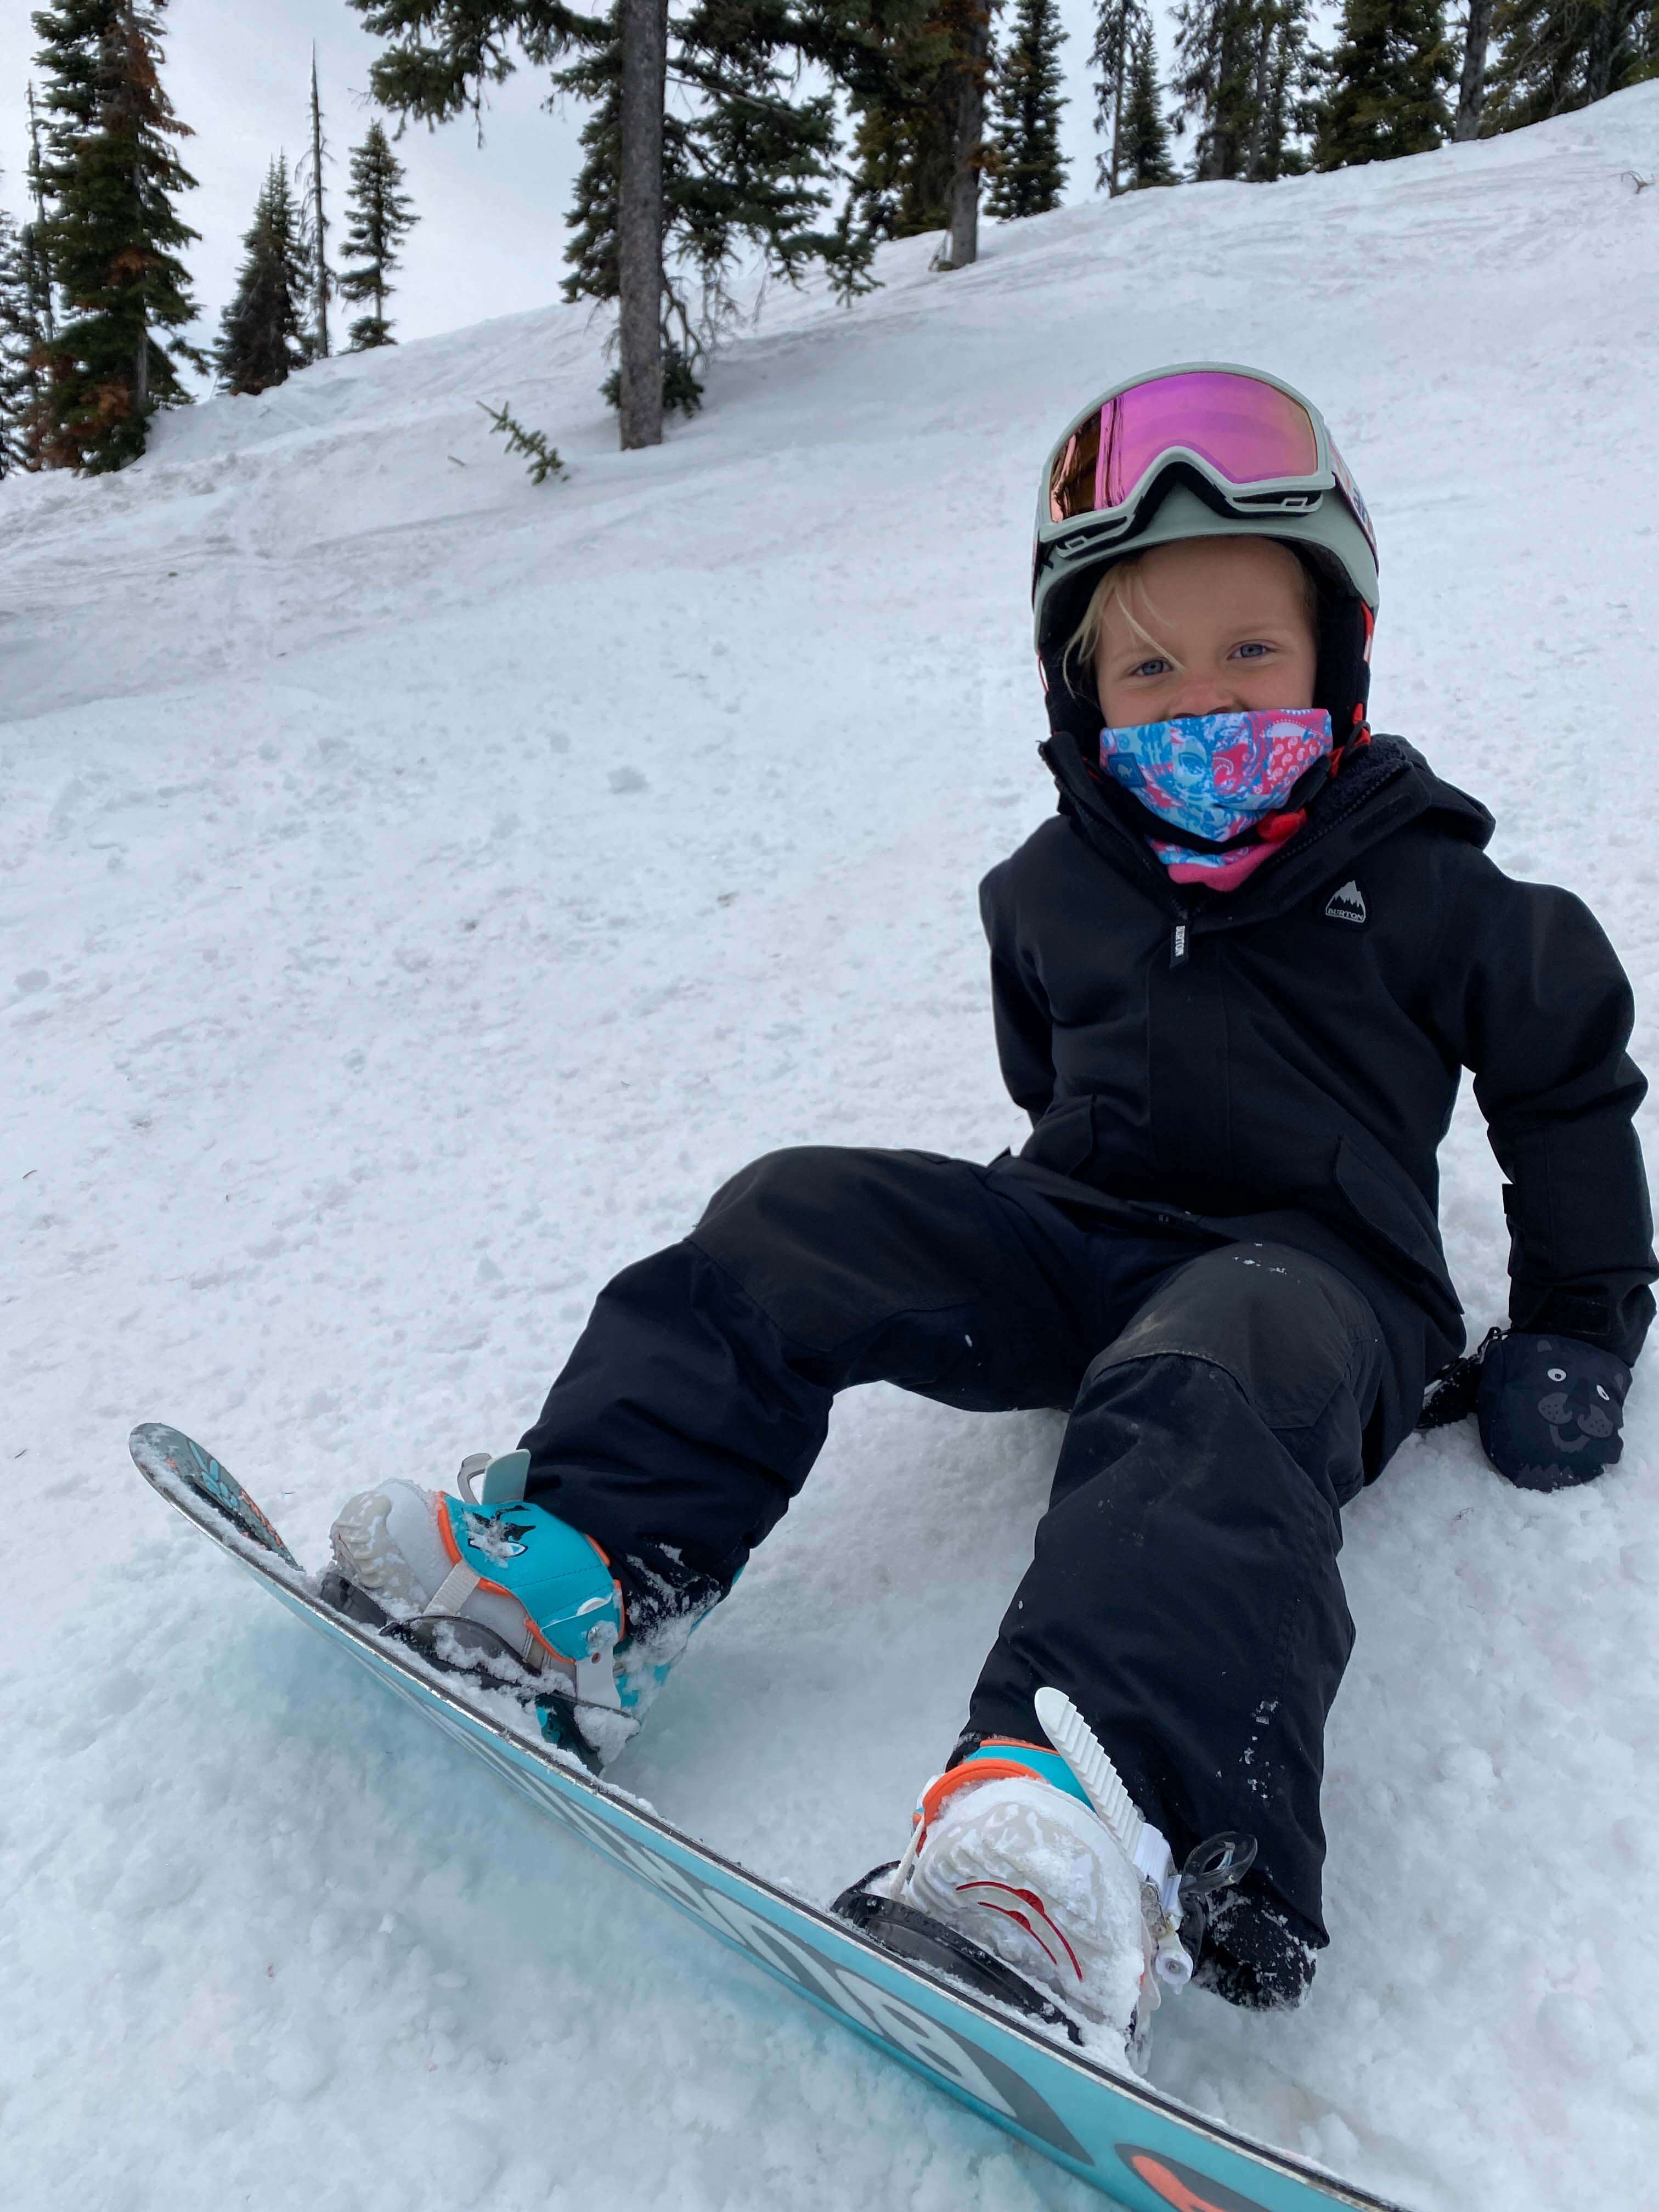 Kid sitting in snow wearing ski pants and jacket